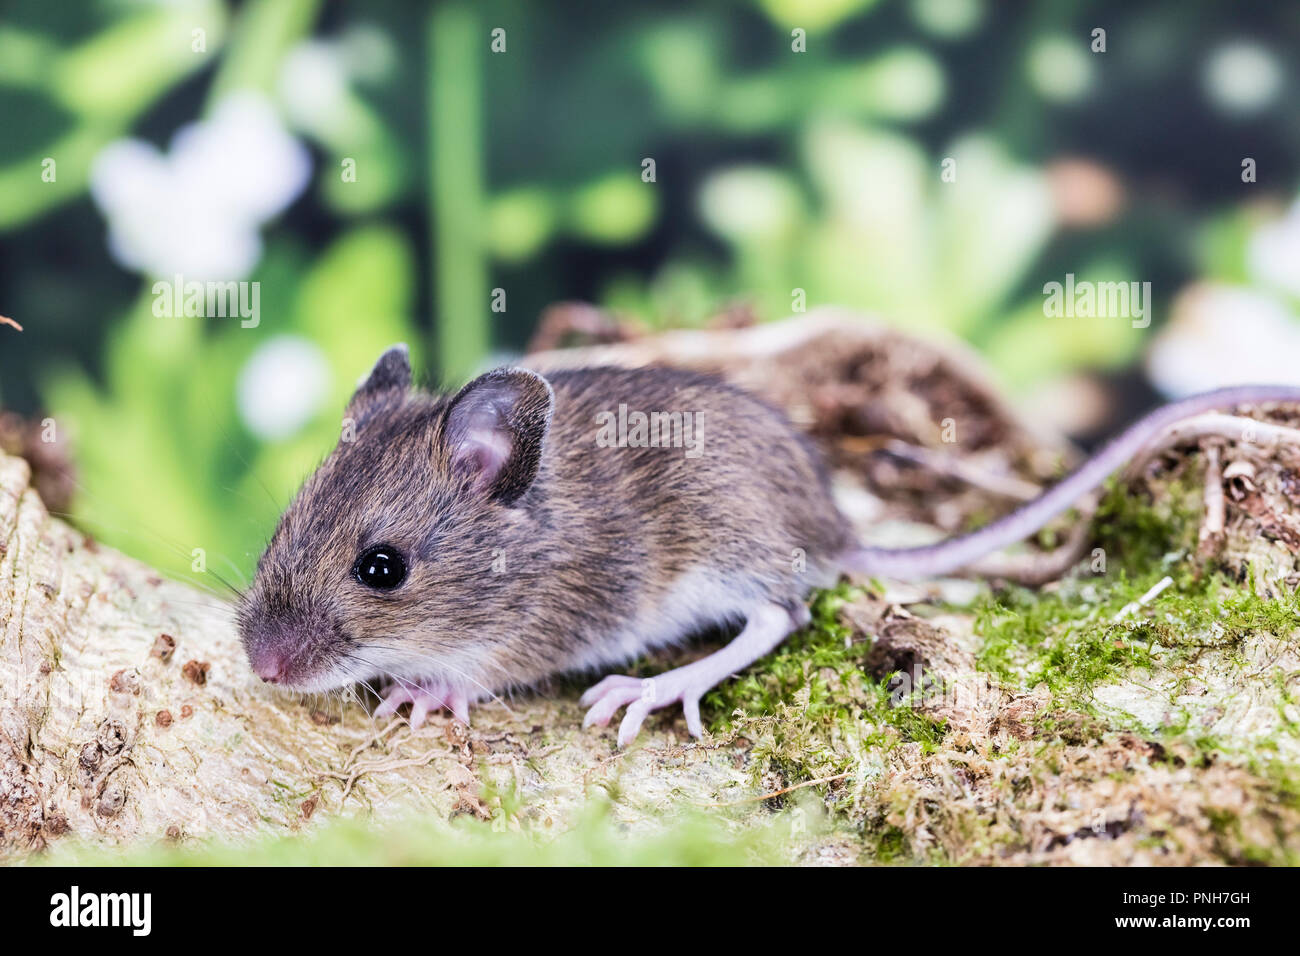 Un ratón de madera joven fotografiado en un plató de aspecto natural, antes de ser liberados ilesos. Foto de stock